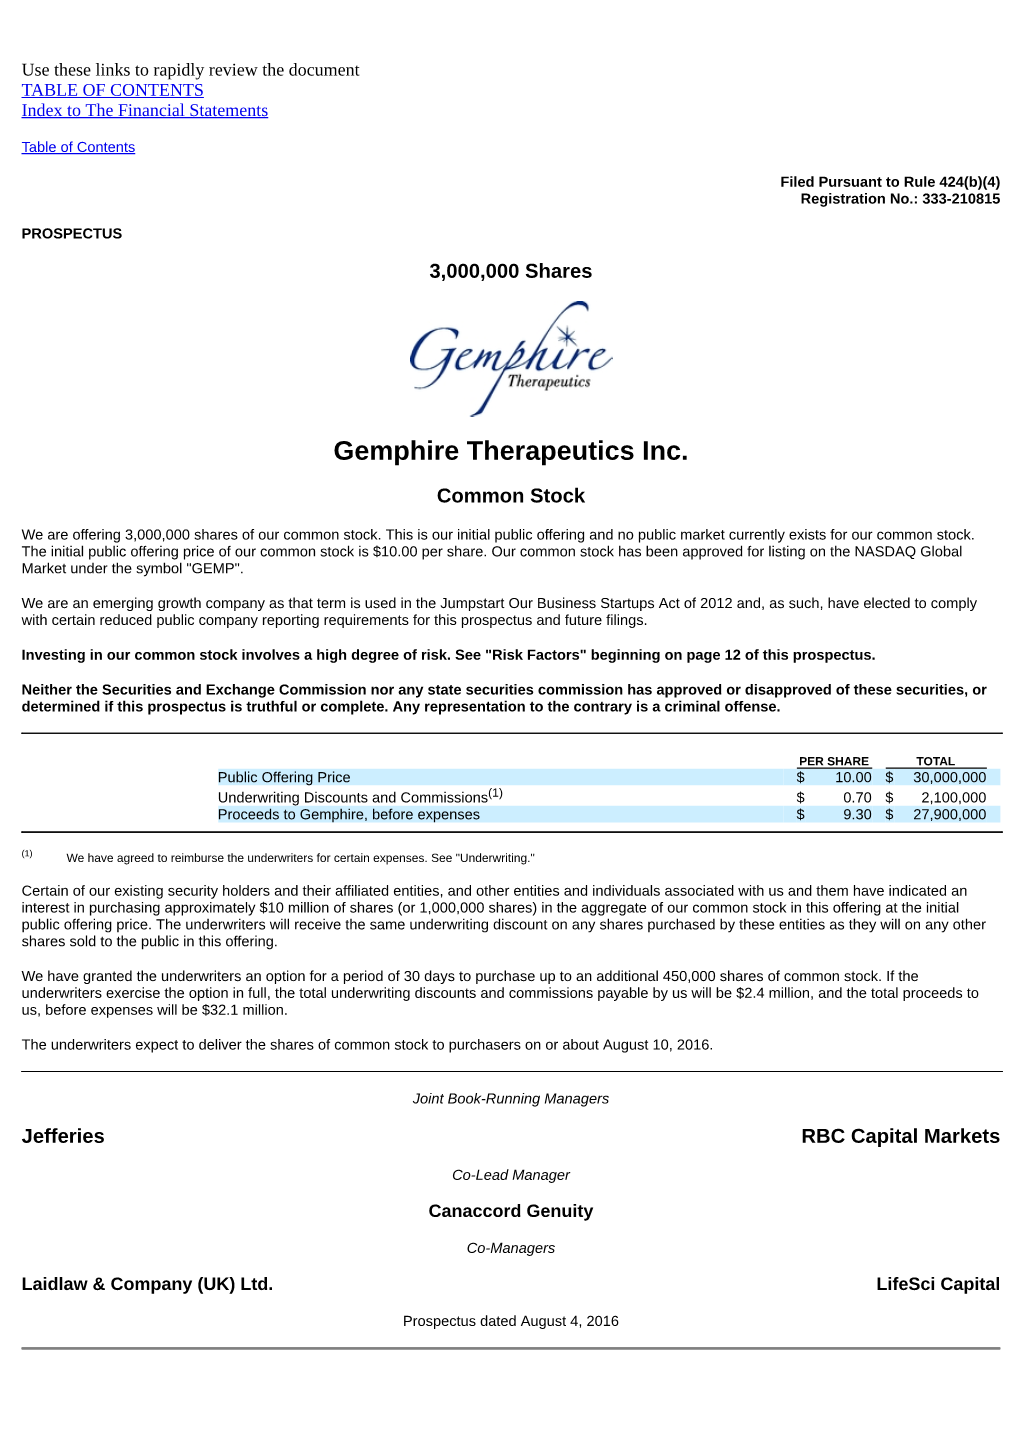 Gemphire Therapeutics Inc